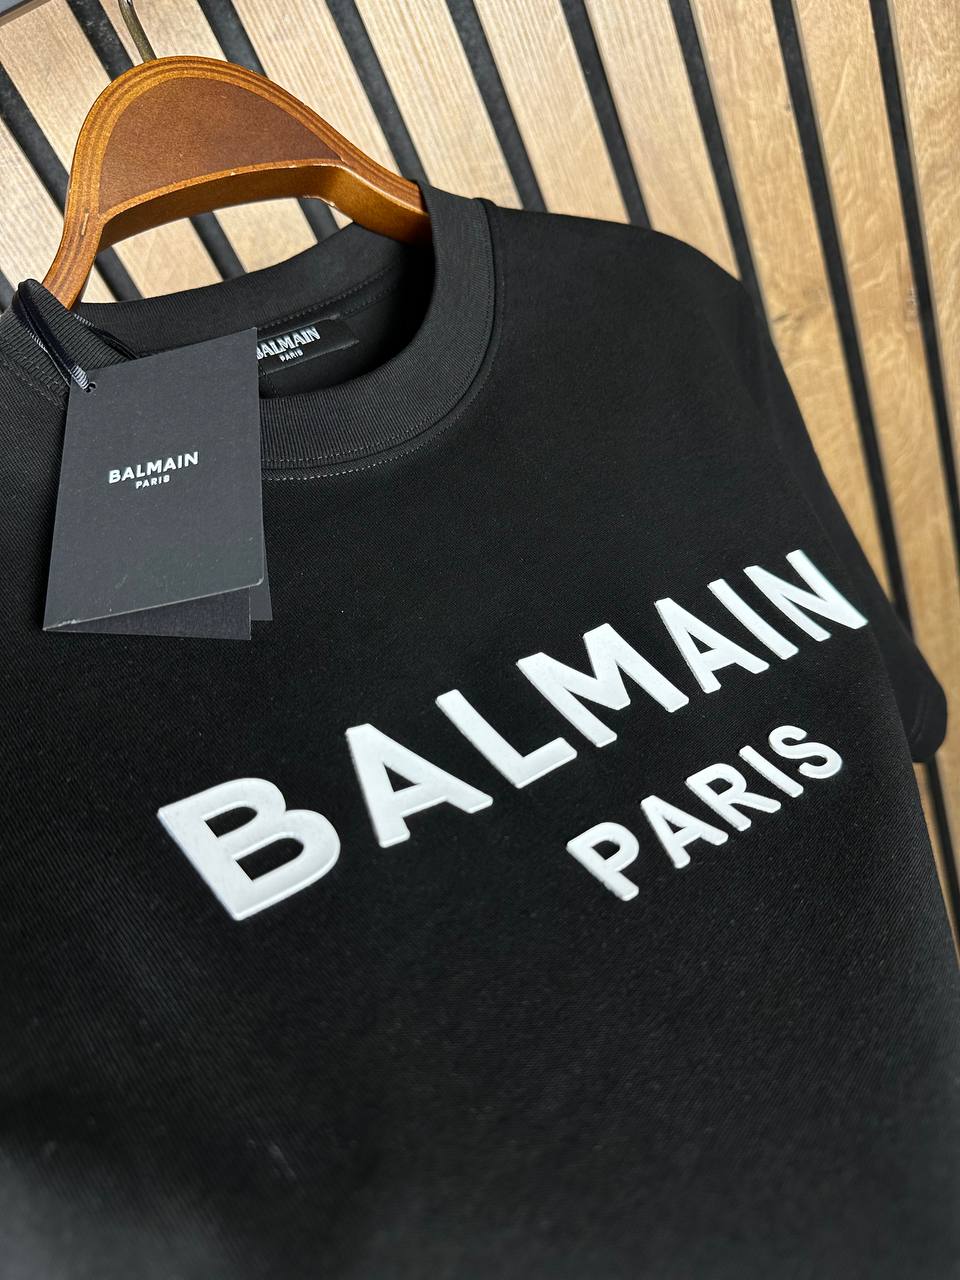 Balmain Paris Rubber Logo Black Tshirt For Men